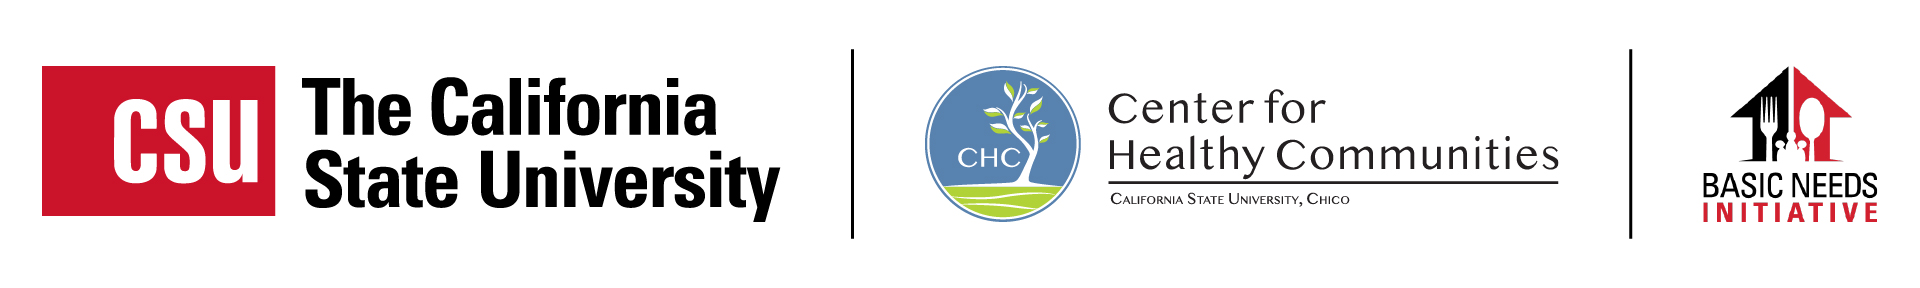 Logos of CSU, CHC, and Basic Needs Initiative